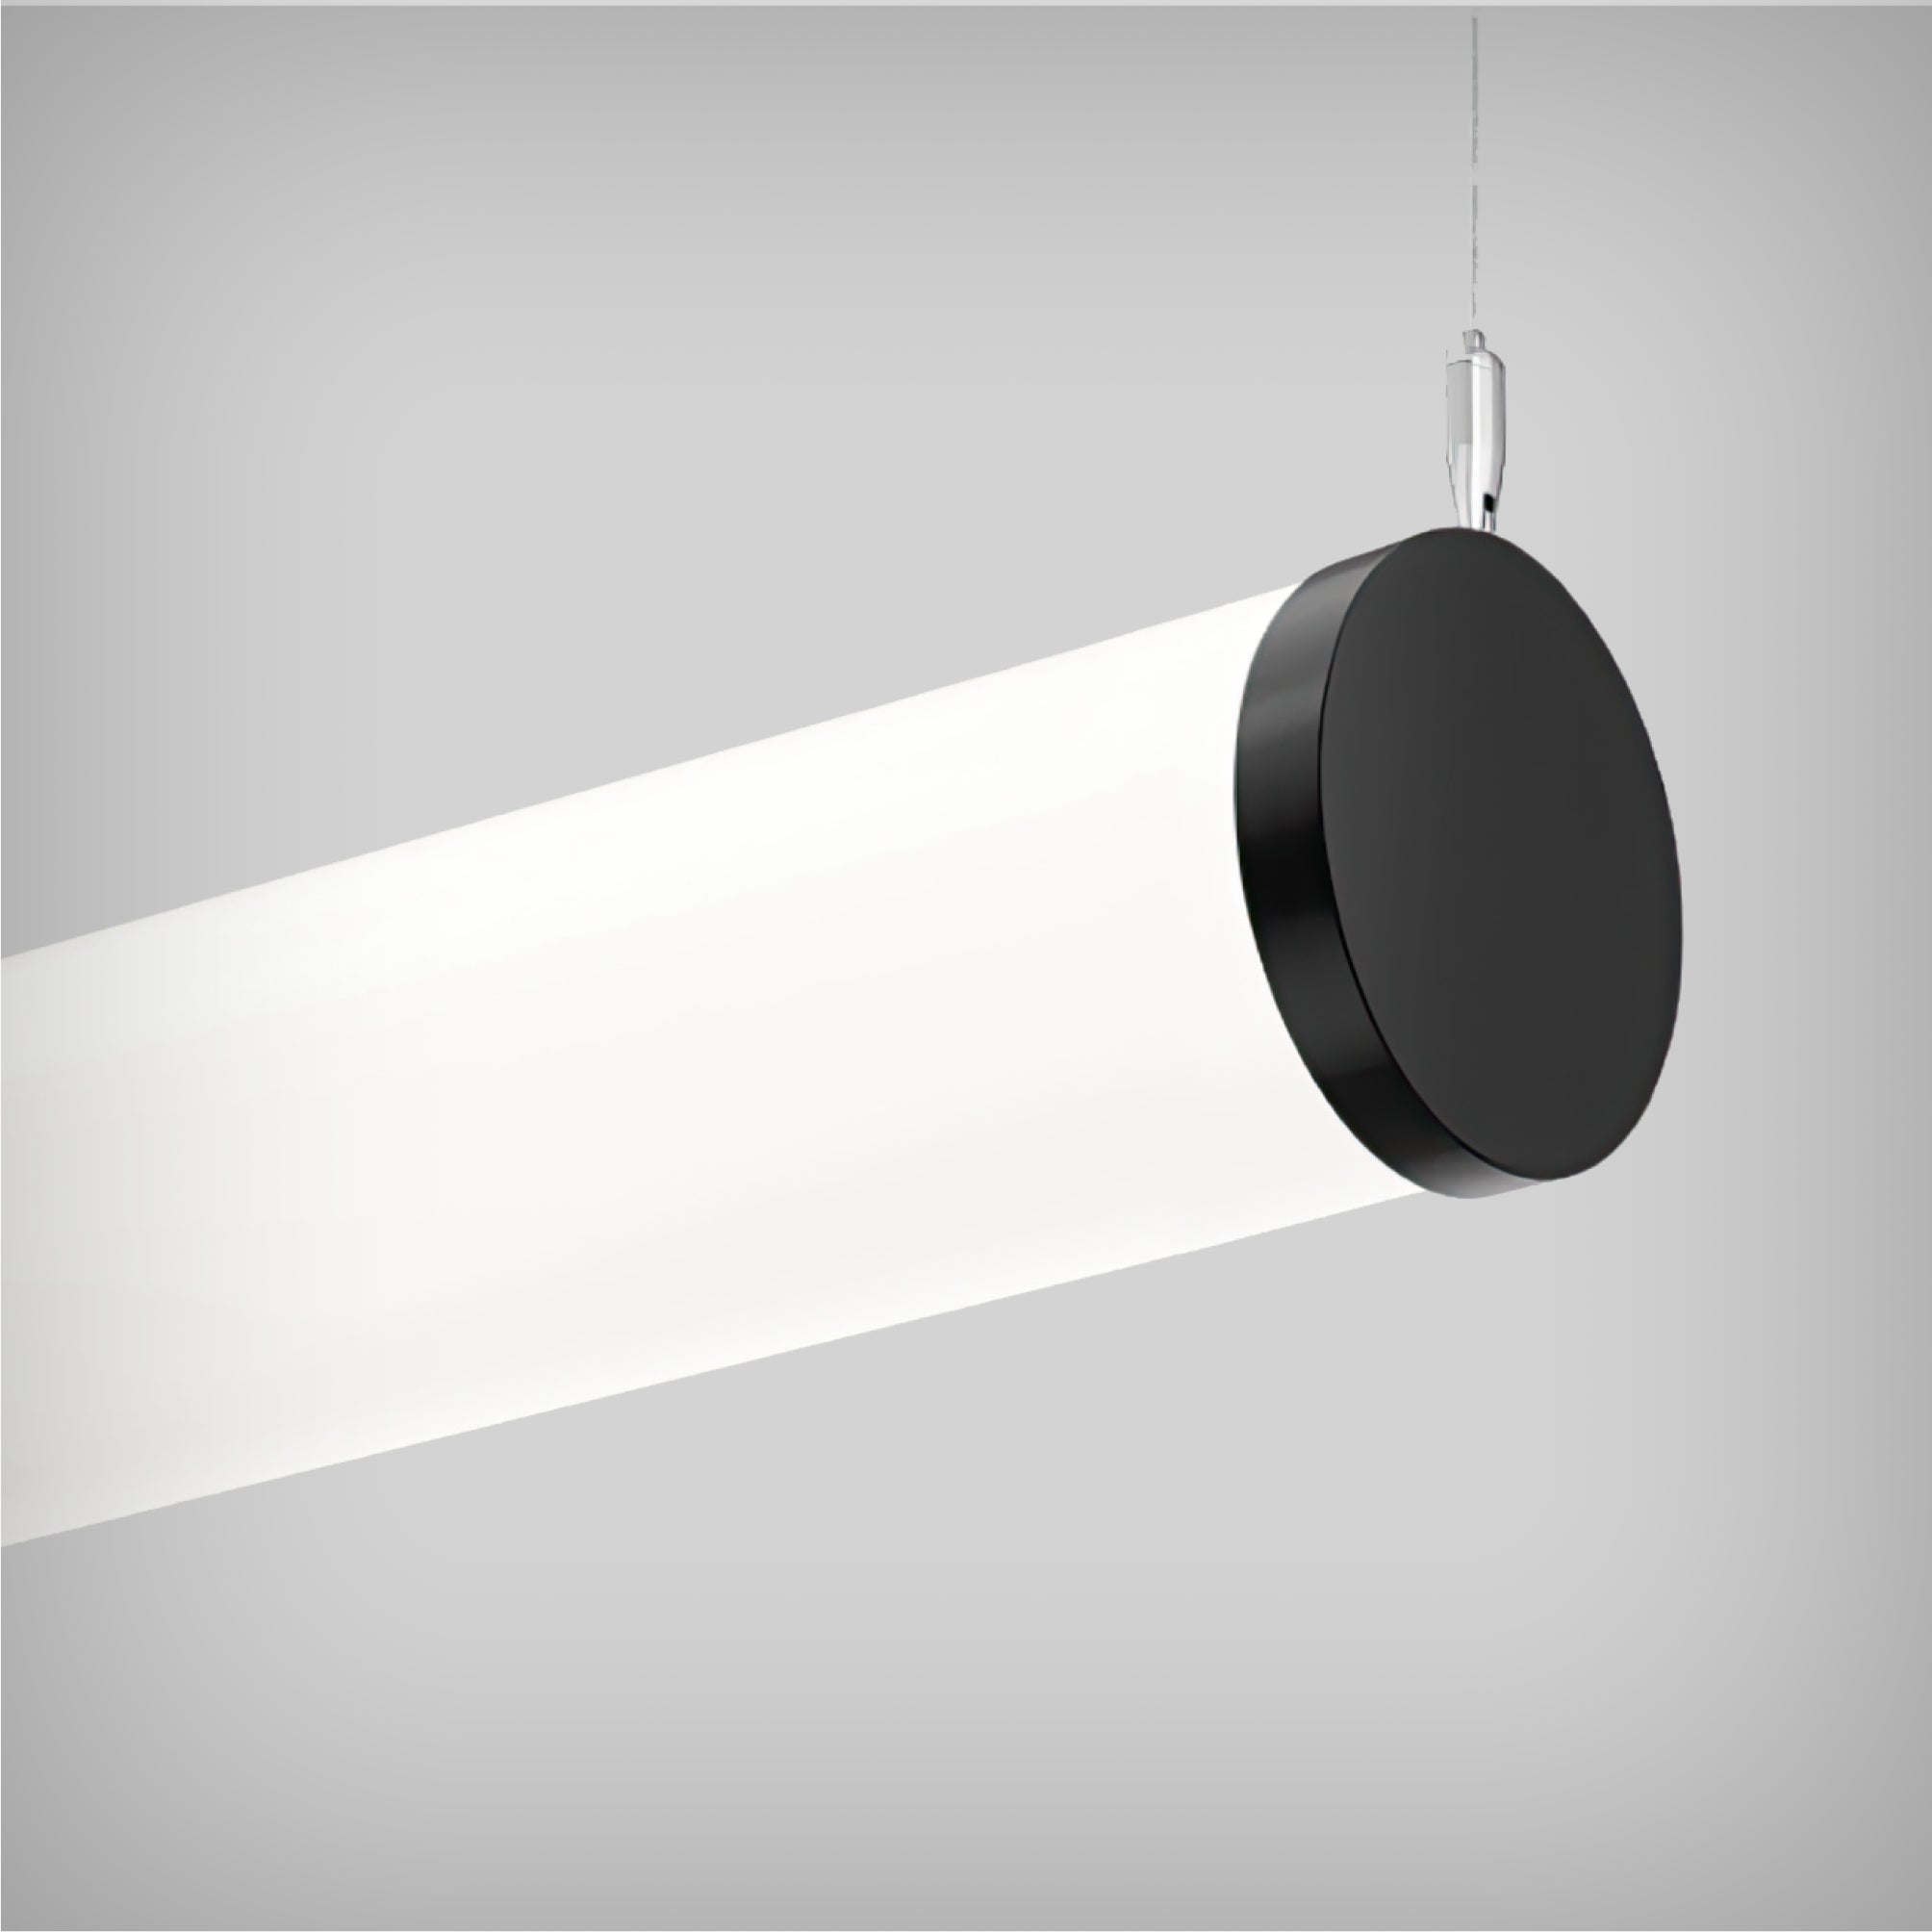 Horizontal LED Tube Pendant Light with a 3.2-Inch Design